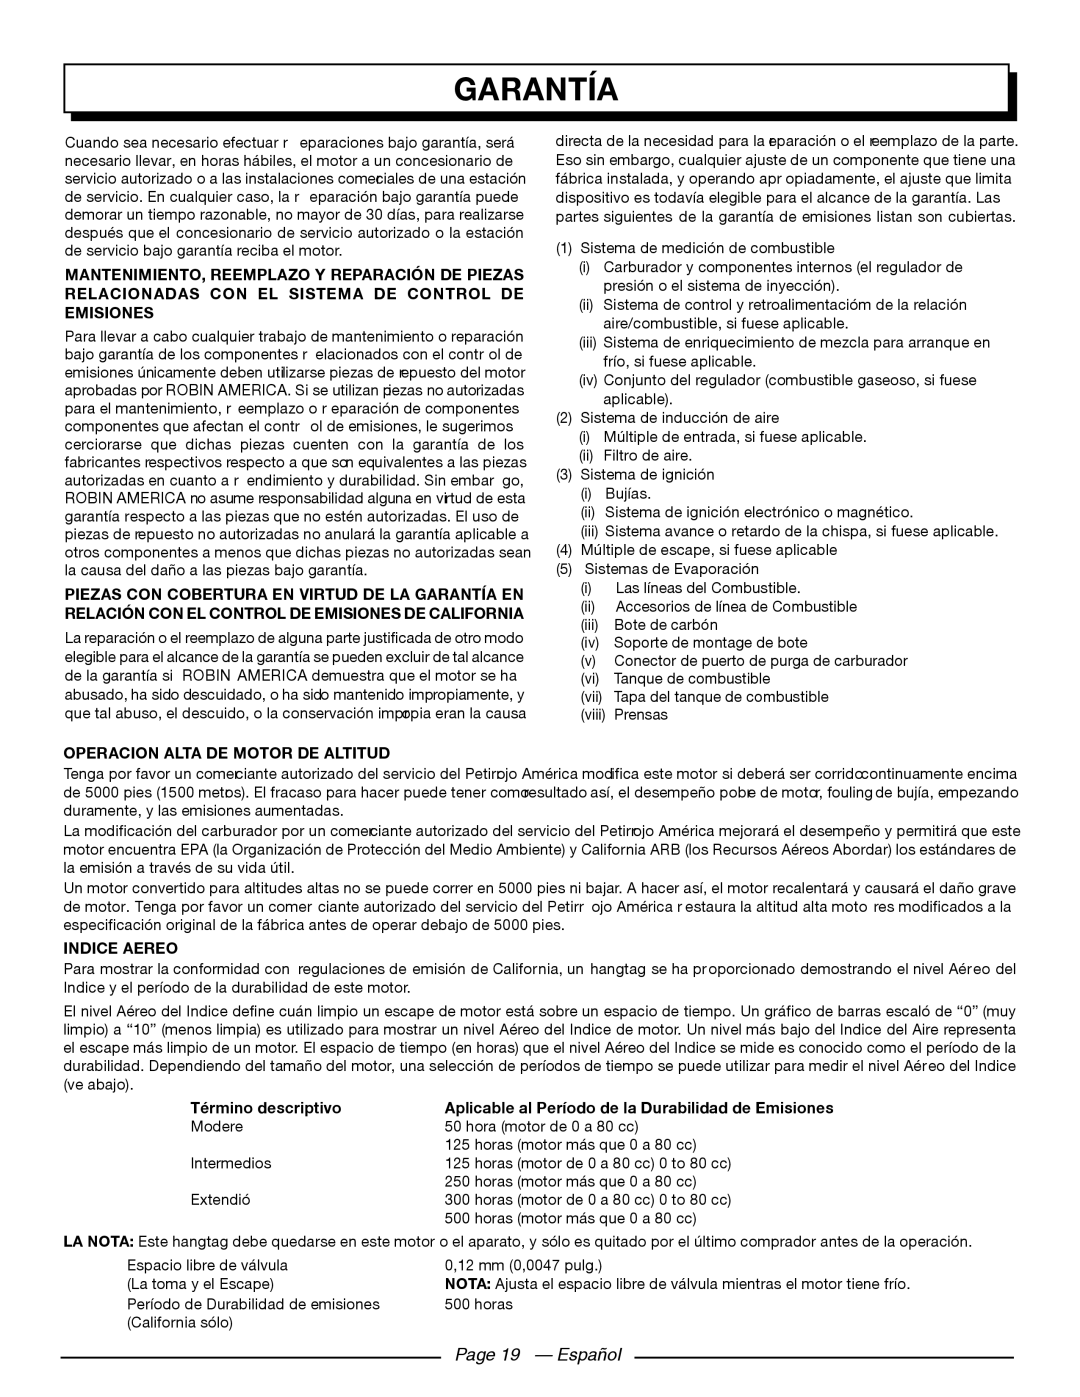 Homelite UT80709 Garantía, Page 19 - Español, Operacion Alta De Motor De Altitud, Indice Aereo, Término descriptivo 